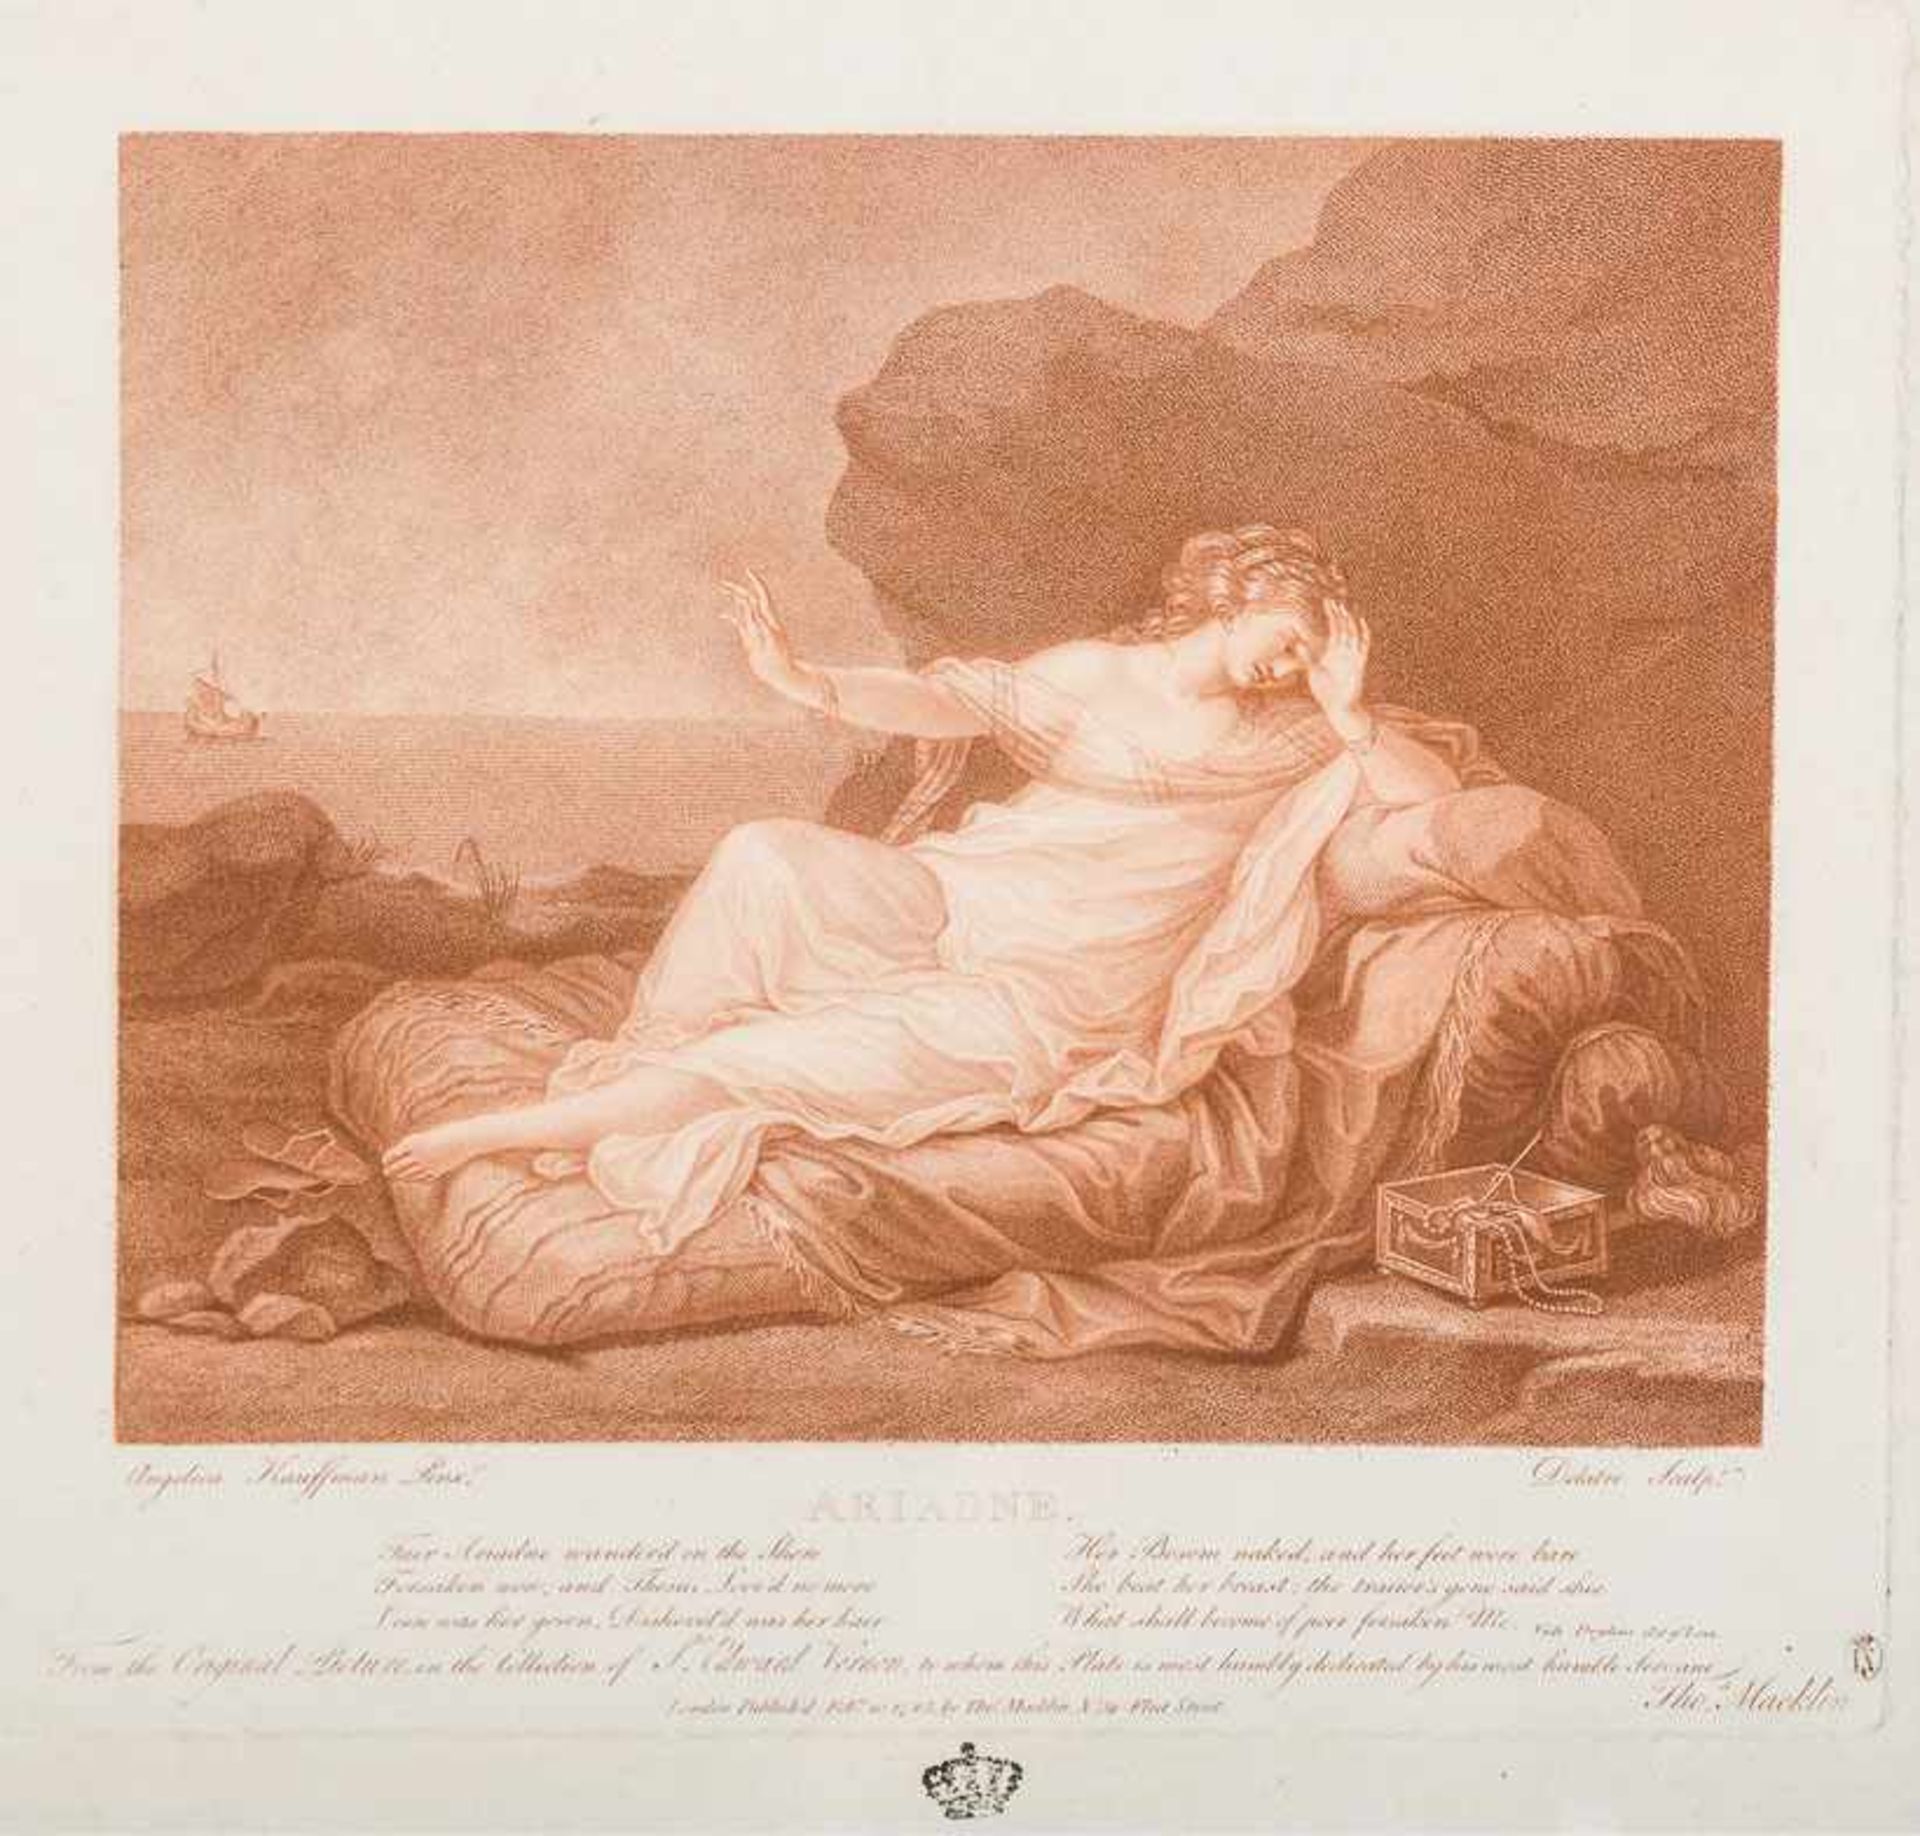 Delattre, Jean-Marie (Abbeville/Somme, Fulham/England 1746-1840) "Adriane" nach Angelika